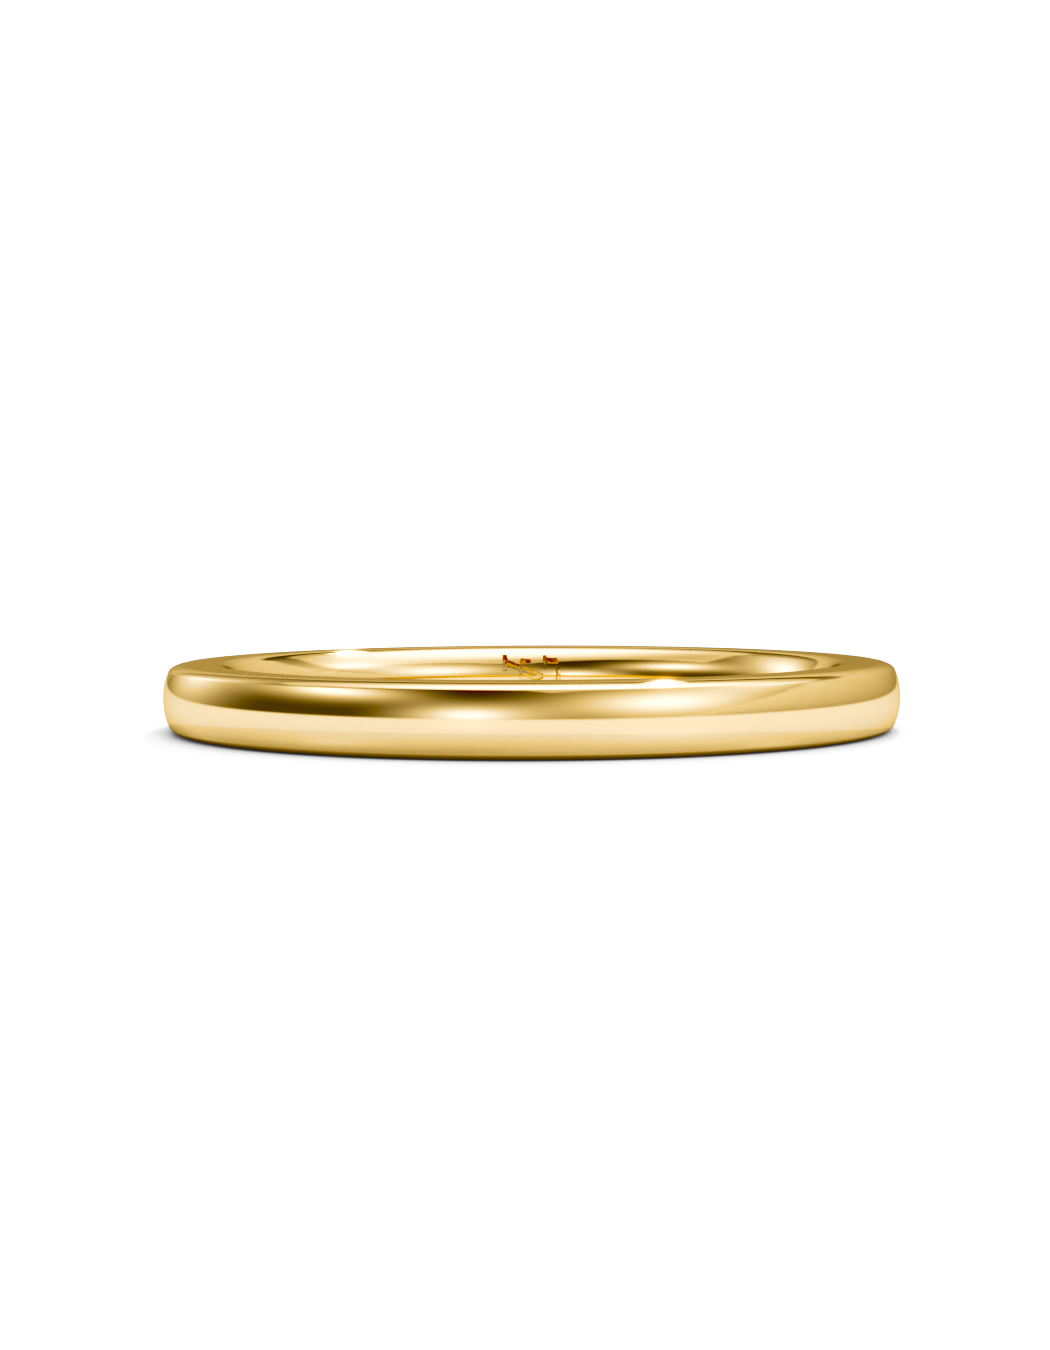 Bedrock Ring 14k / 18k Gold - 2mm